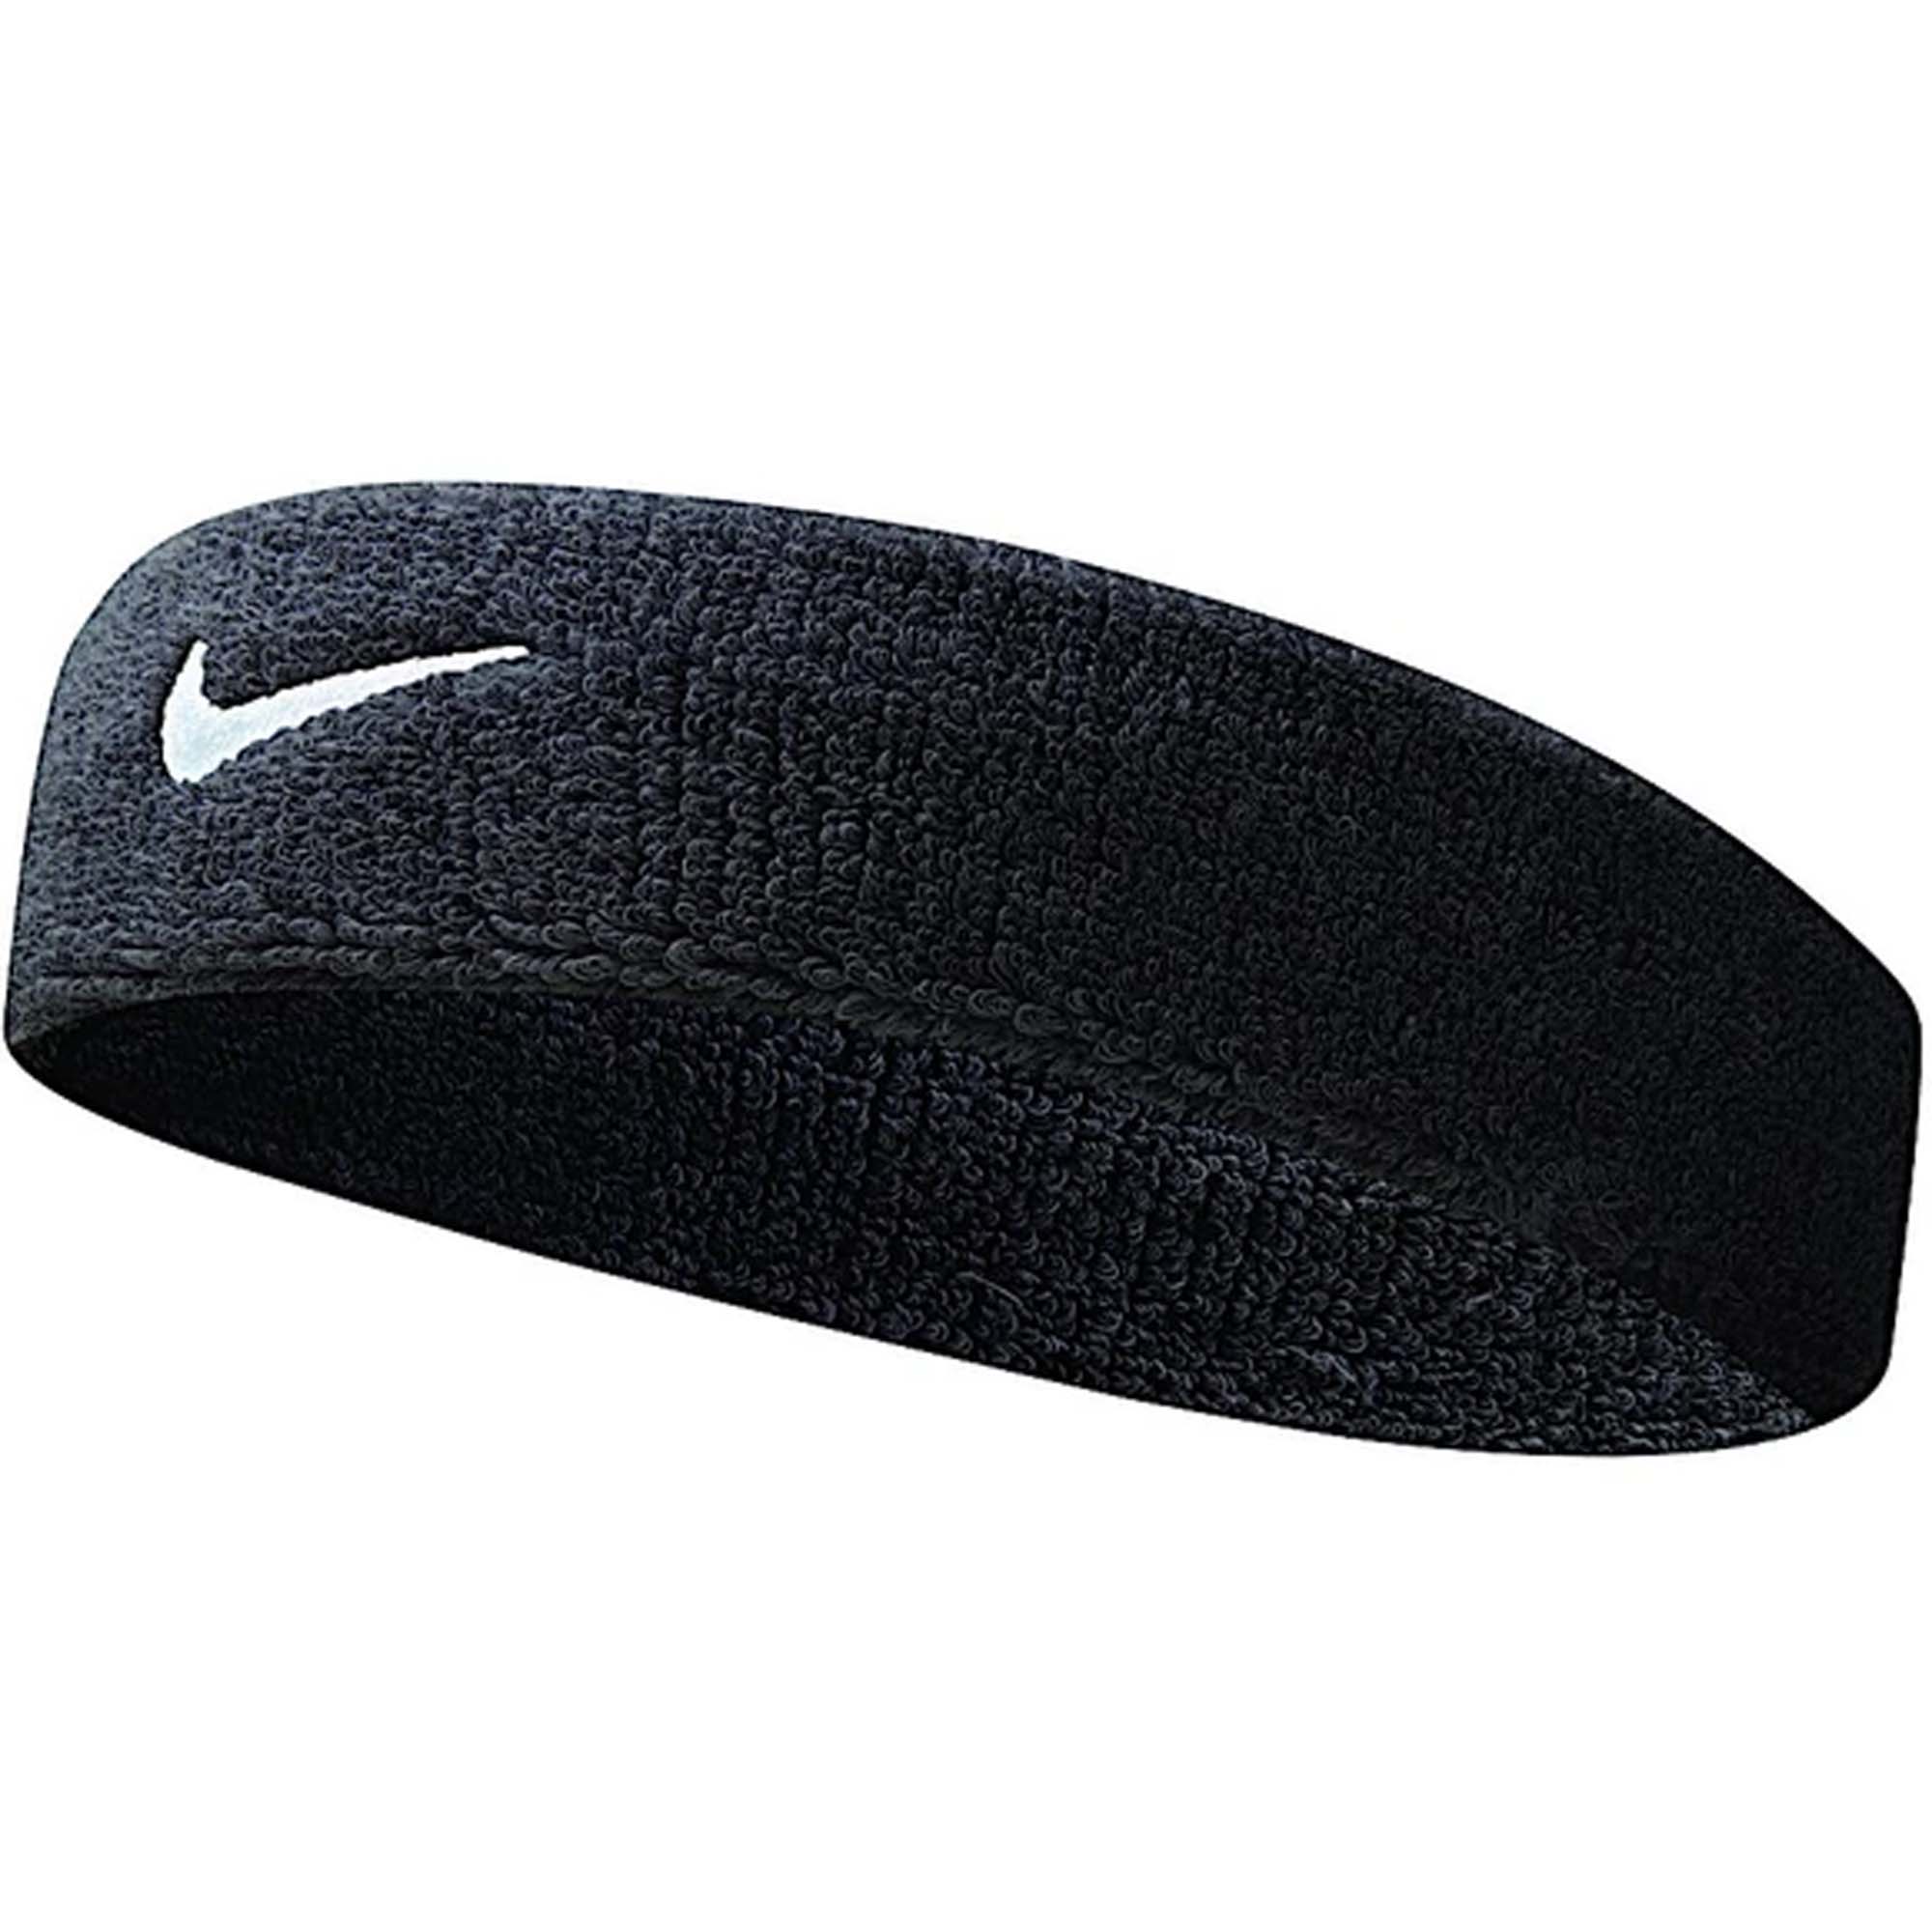 Nike accessoires nike swoosh headband